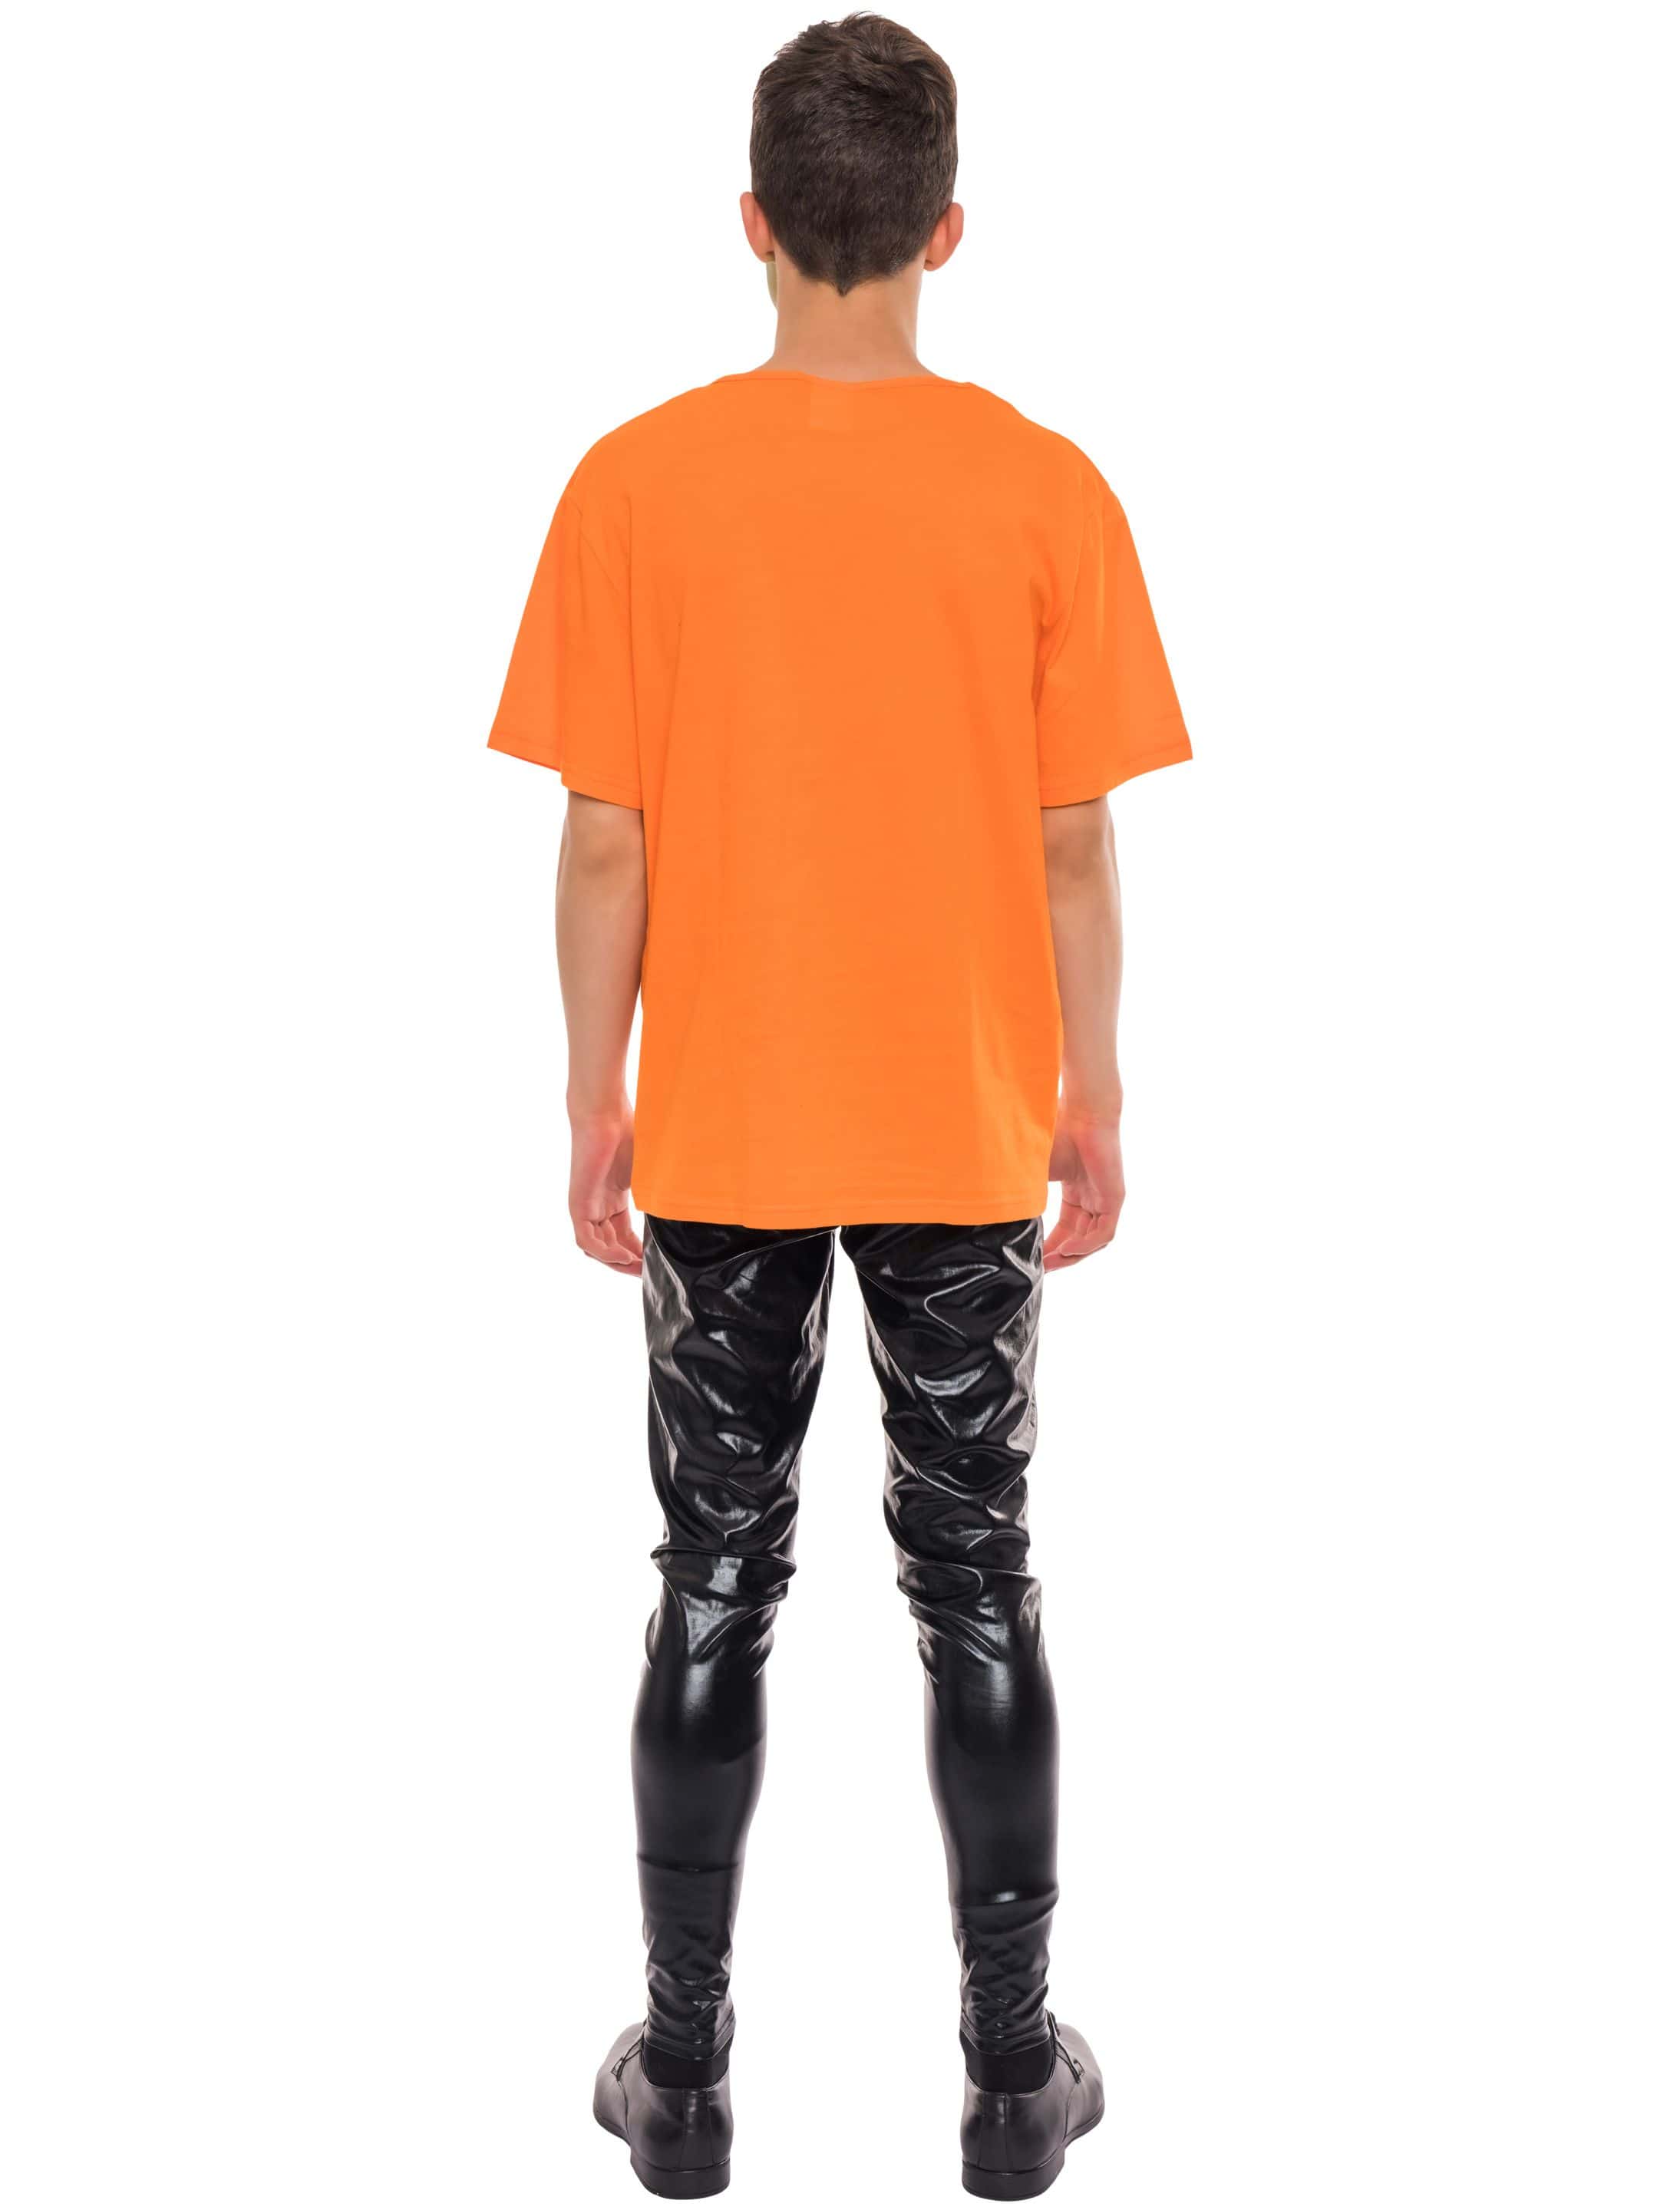 T-Shirt Halloween Kürbis orange 4XL/5XL